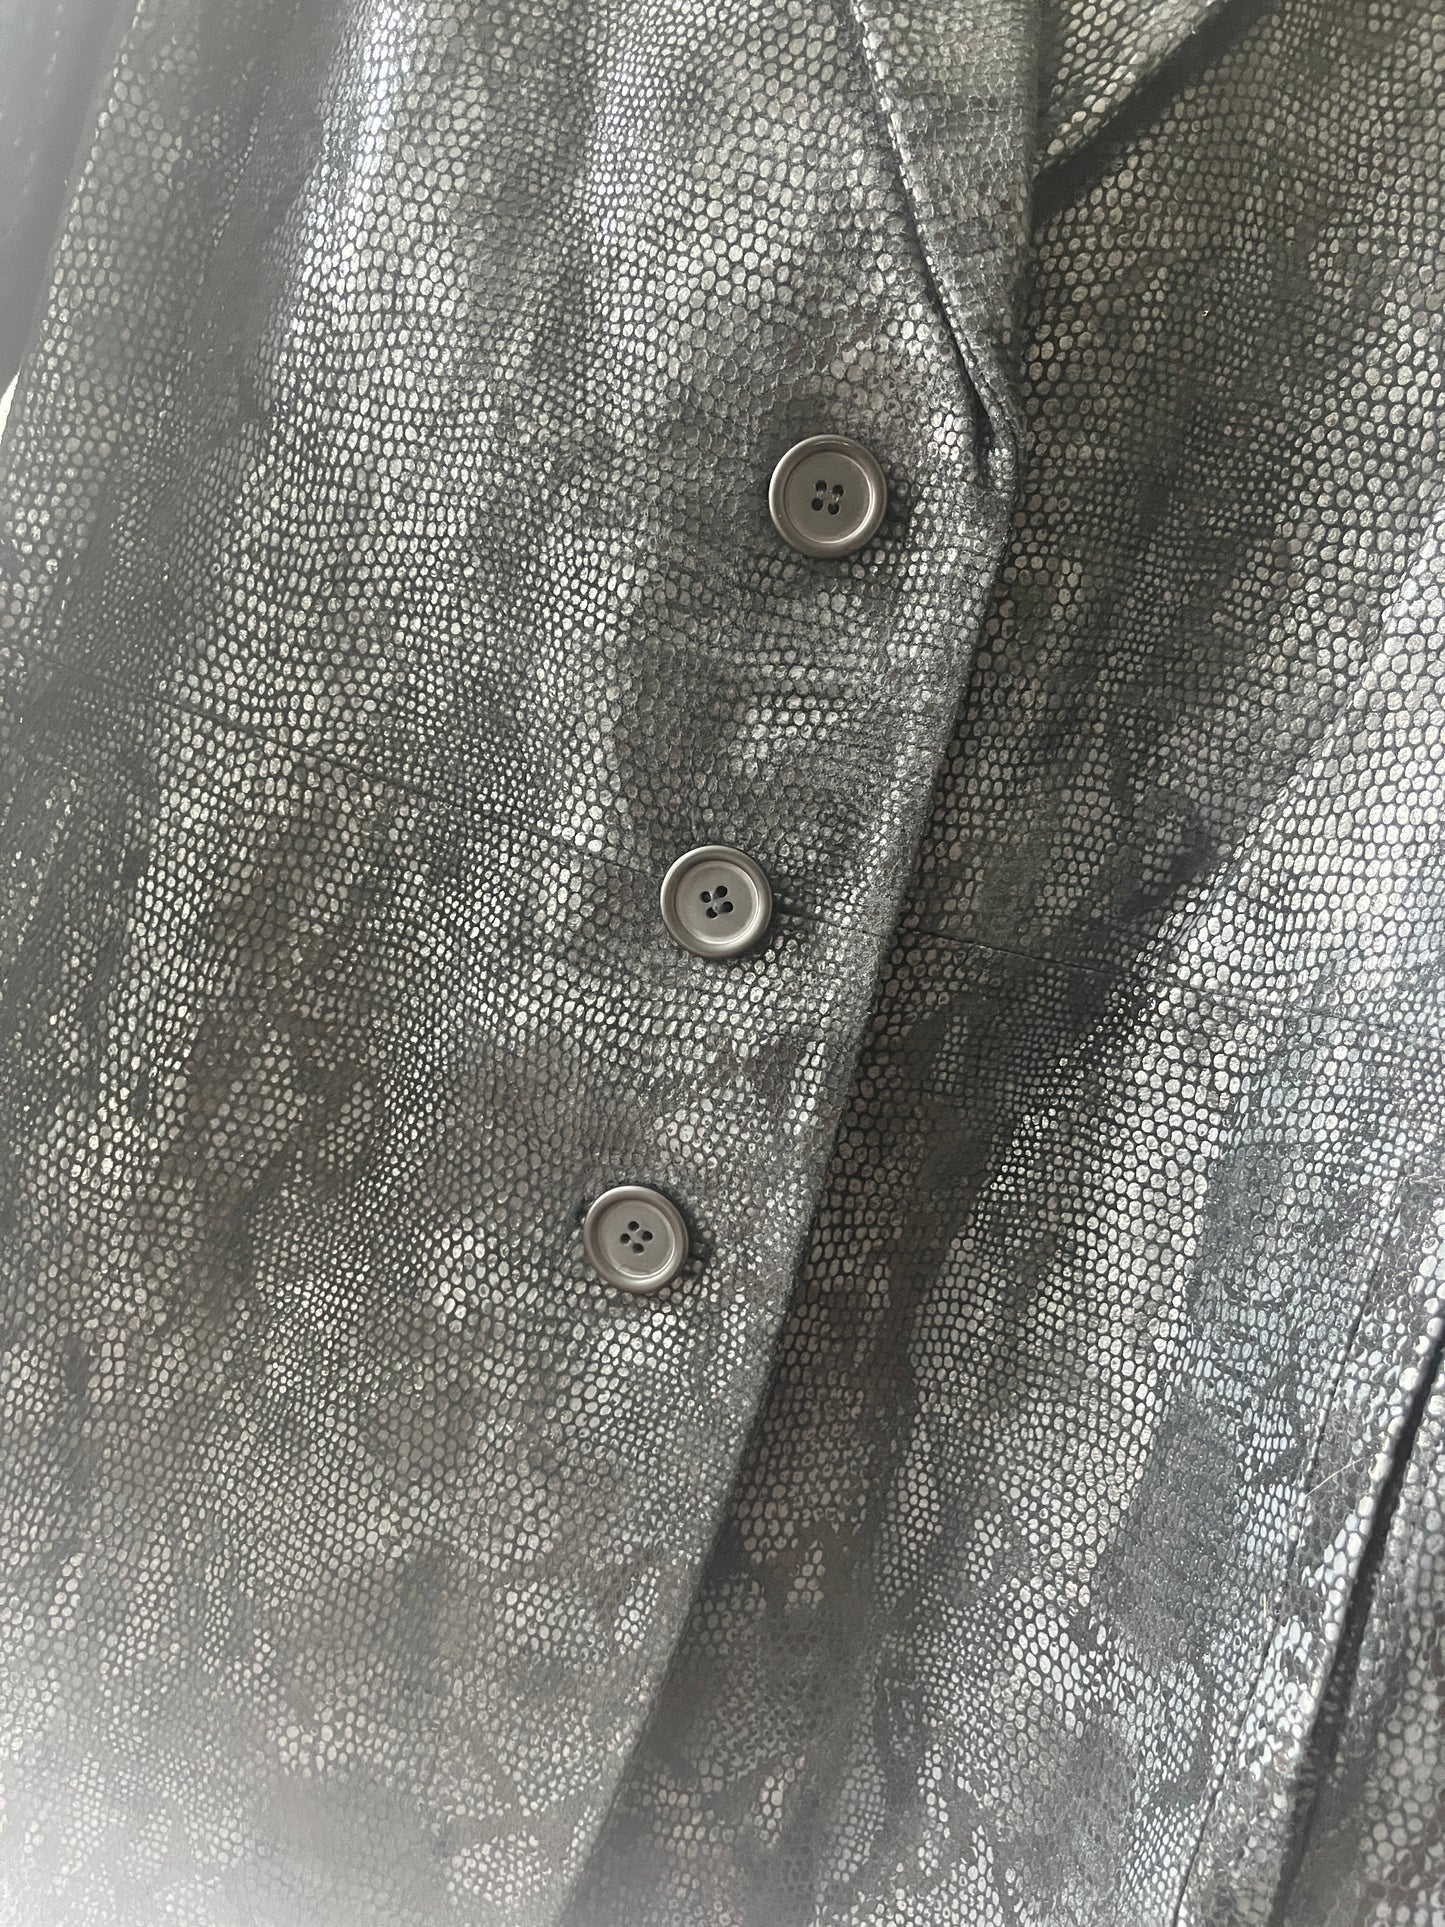 Vintage 90's Leather Black Snake Print Jacket Blazer